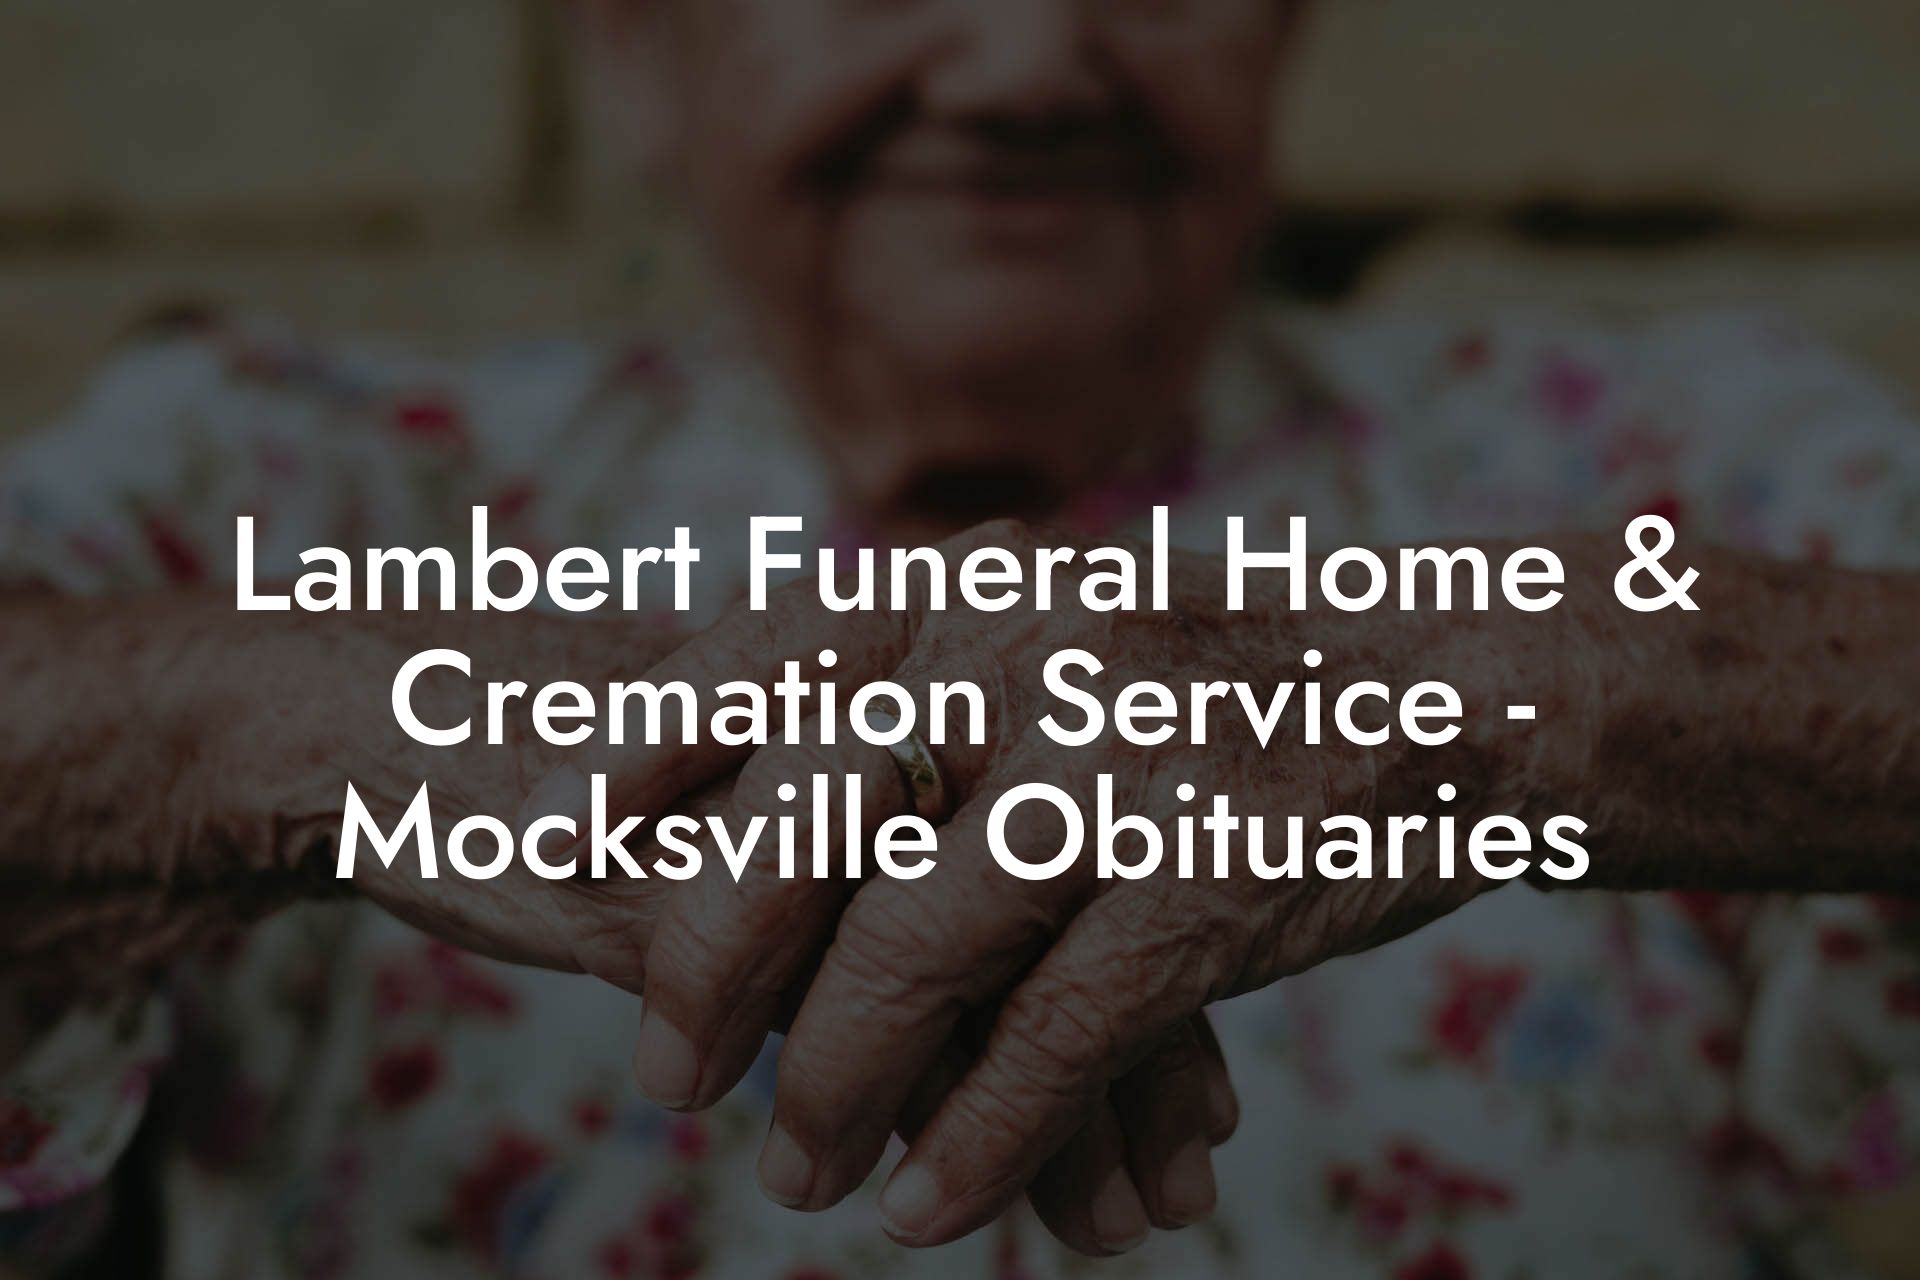 Lambert Funeral Home & Cremation Service - Mocksville Obituaries